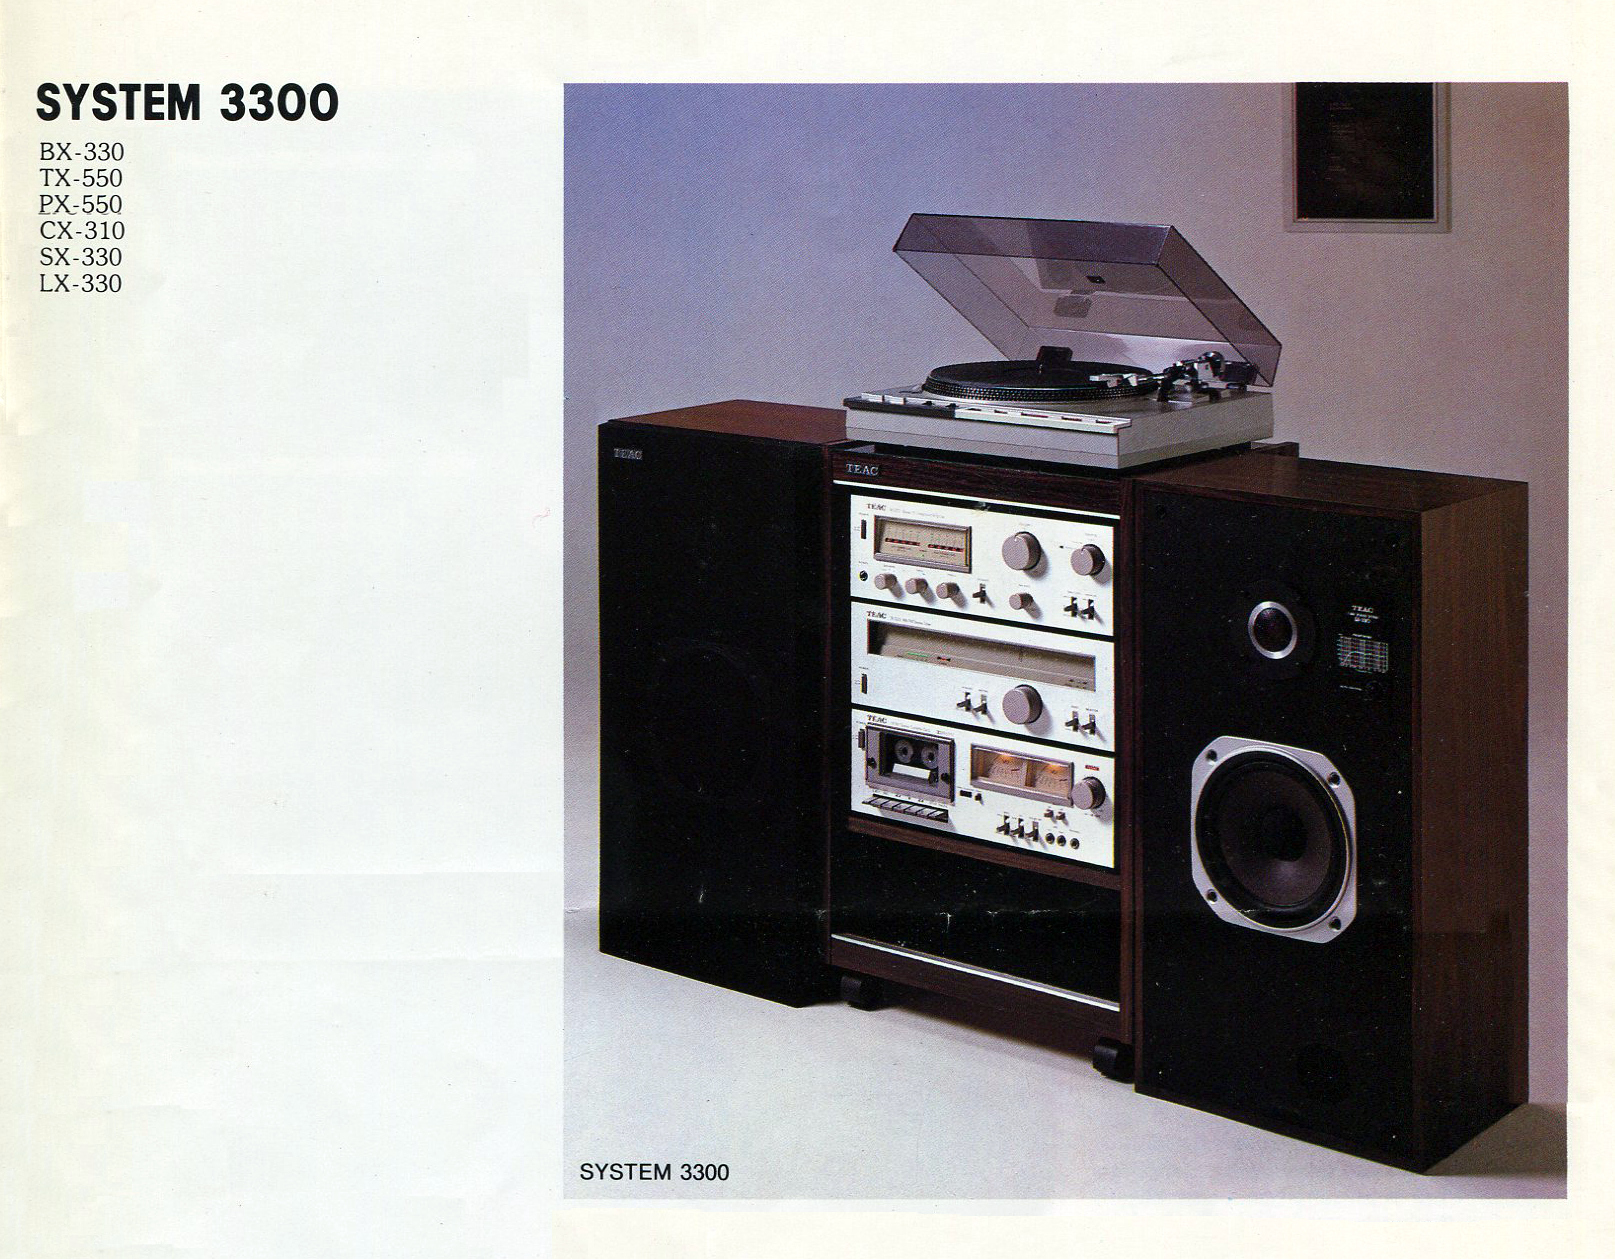 Teac System 3300-1980.jpg